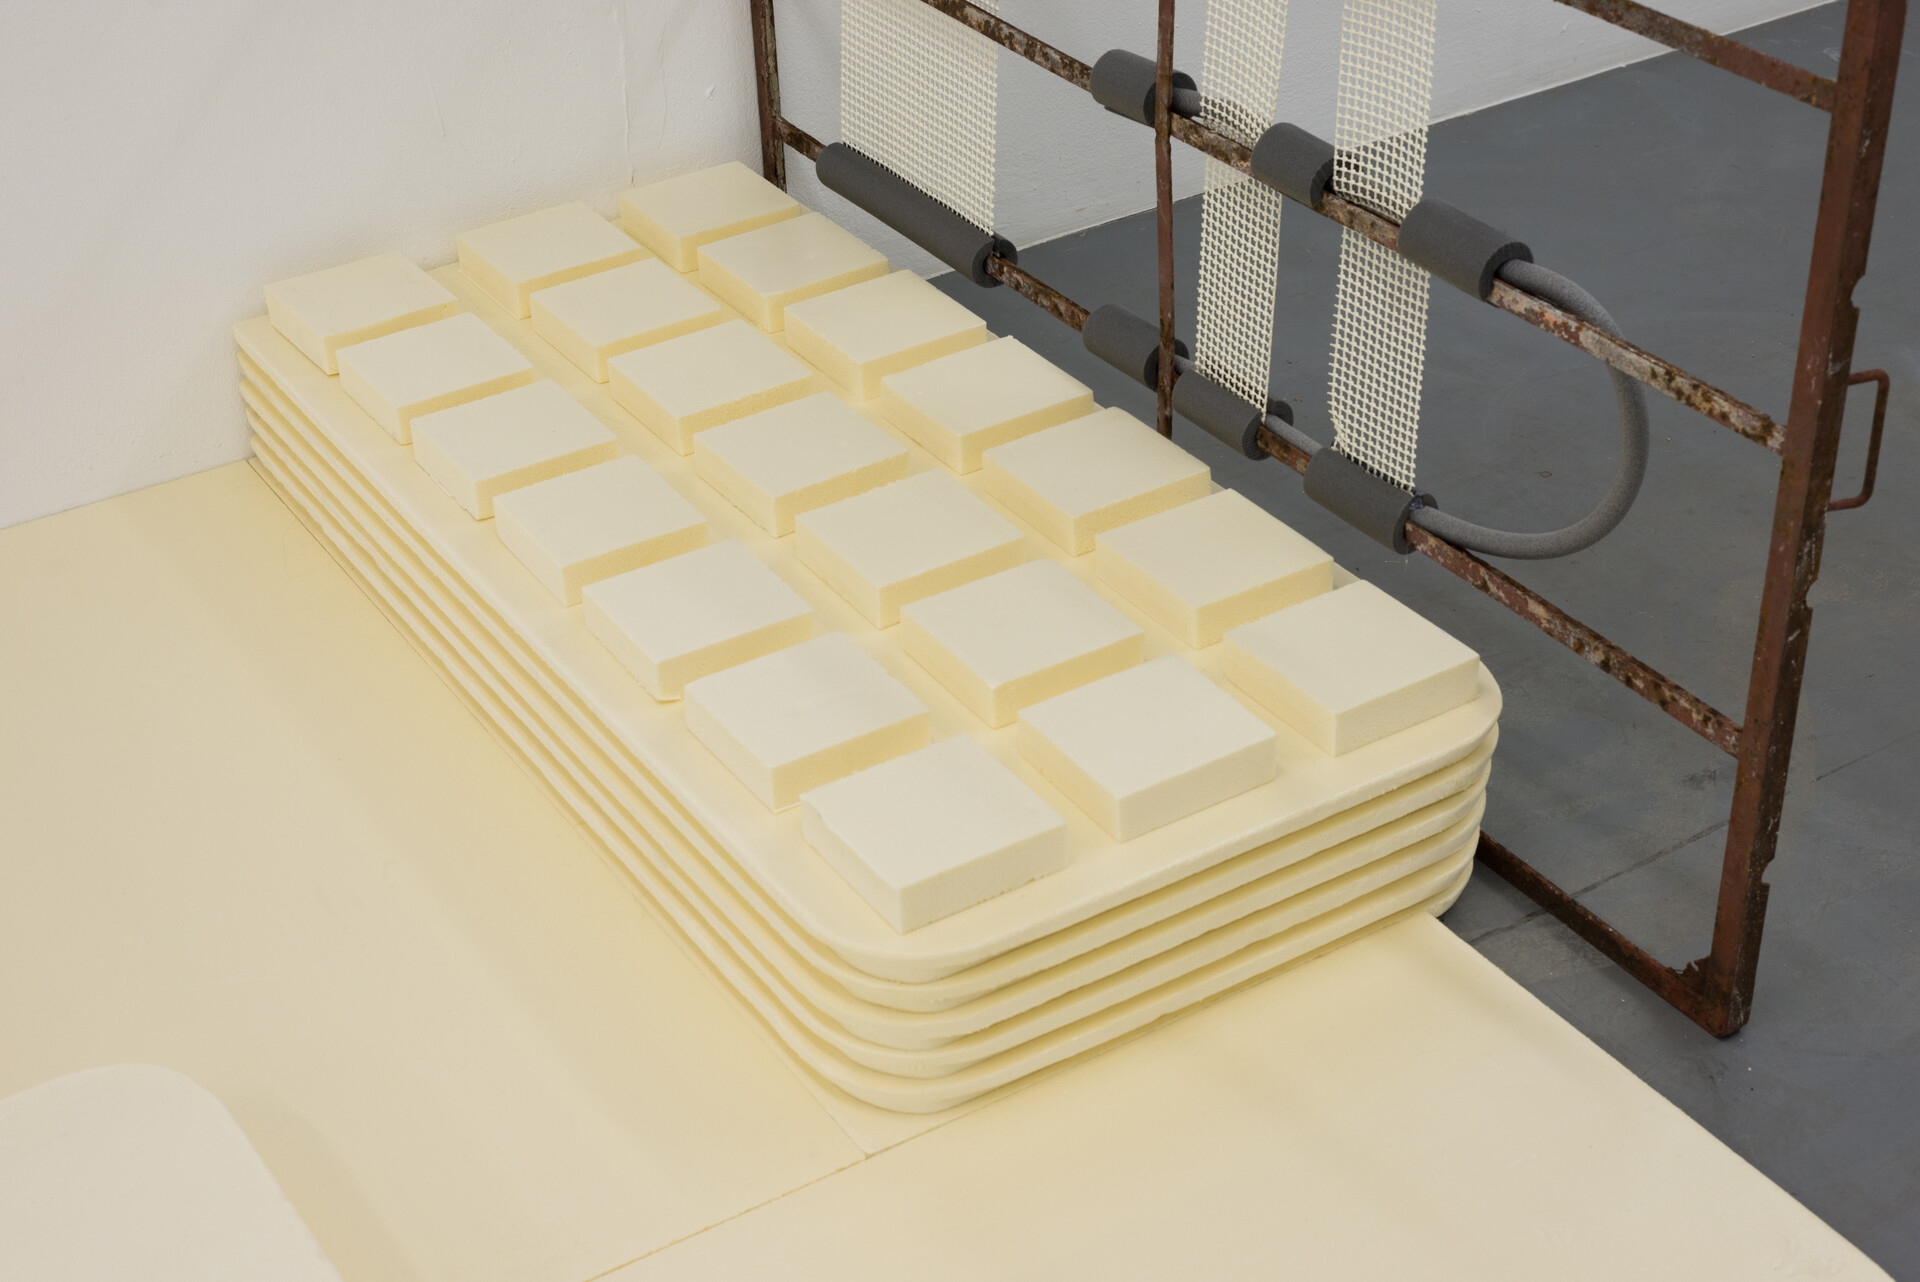 Ziege (Boxsack), Series of 5 objects, 58×21×21cm, 2018, Strap, Foam, Plastic, Rubber